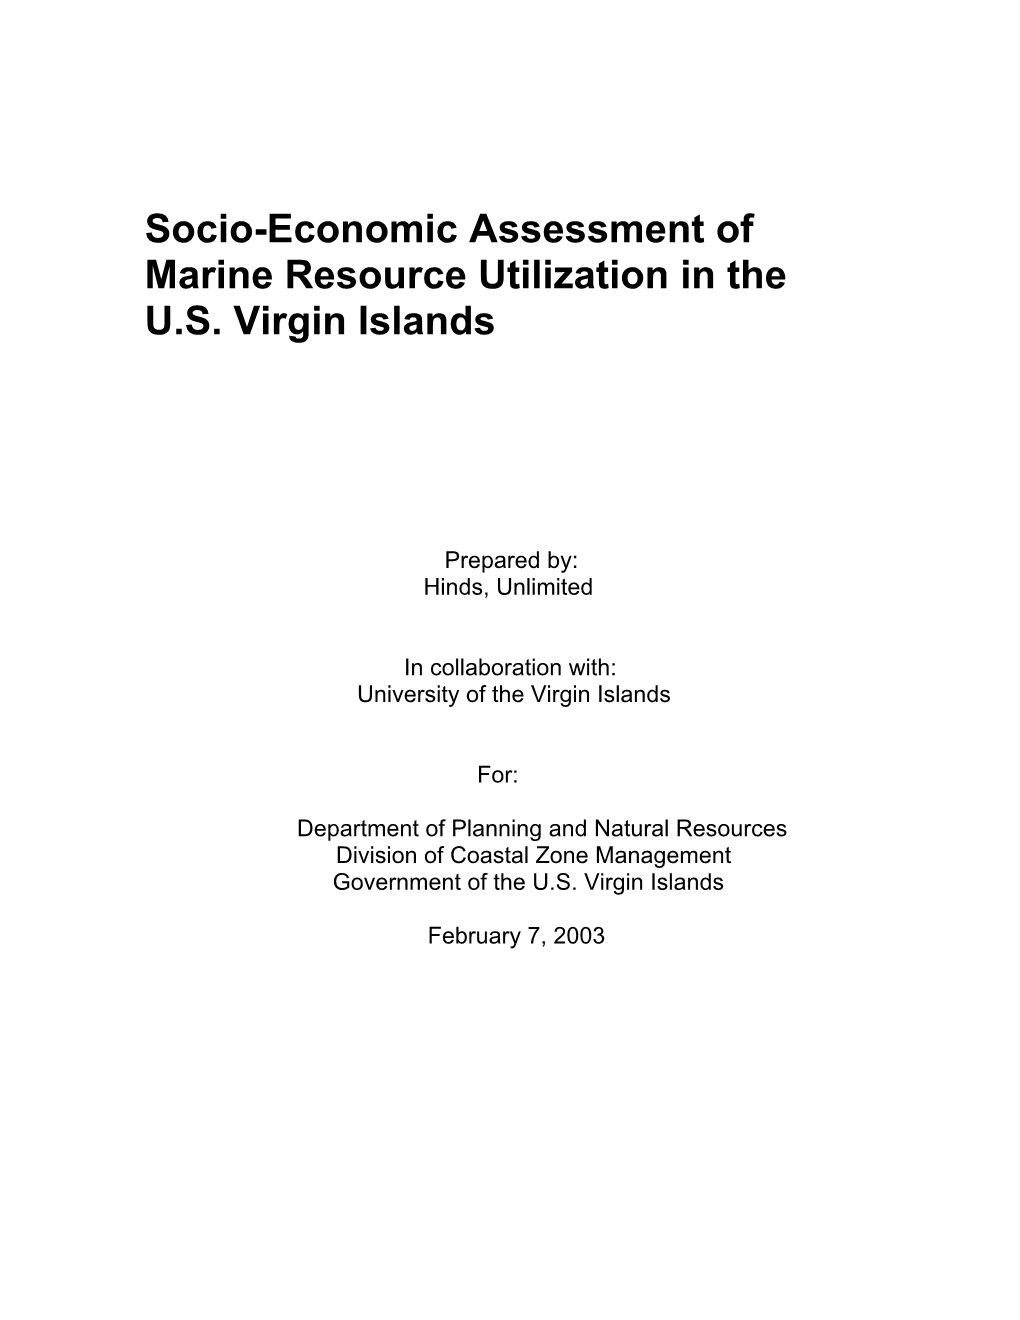 Socio-Economic Assessment of Marine Resource Utilization in the U.S. Virgin Islands